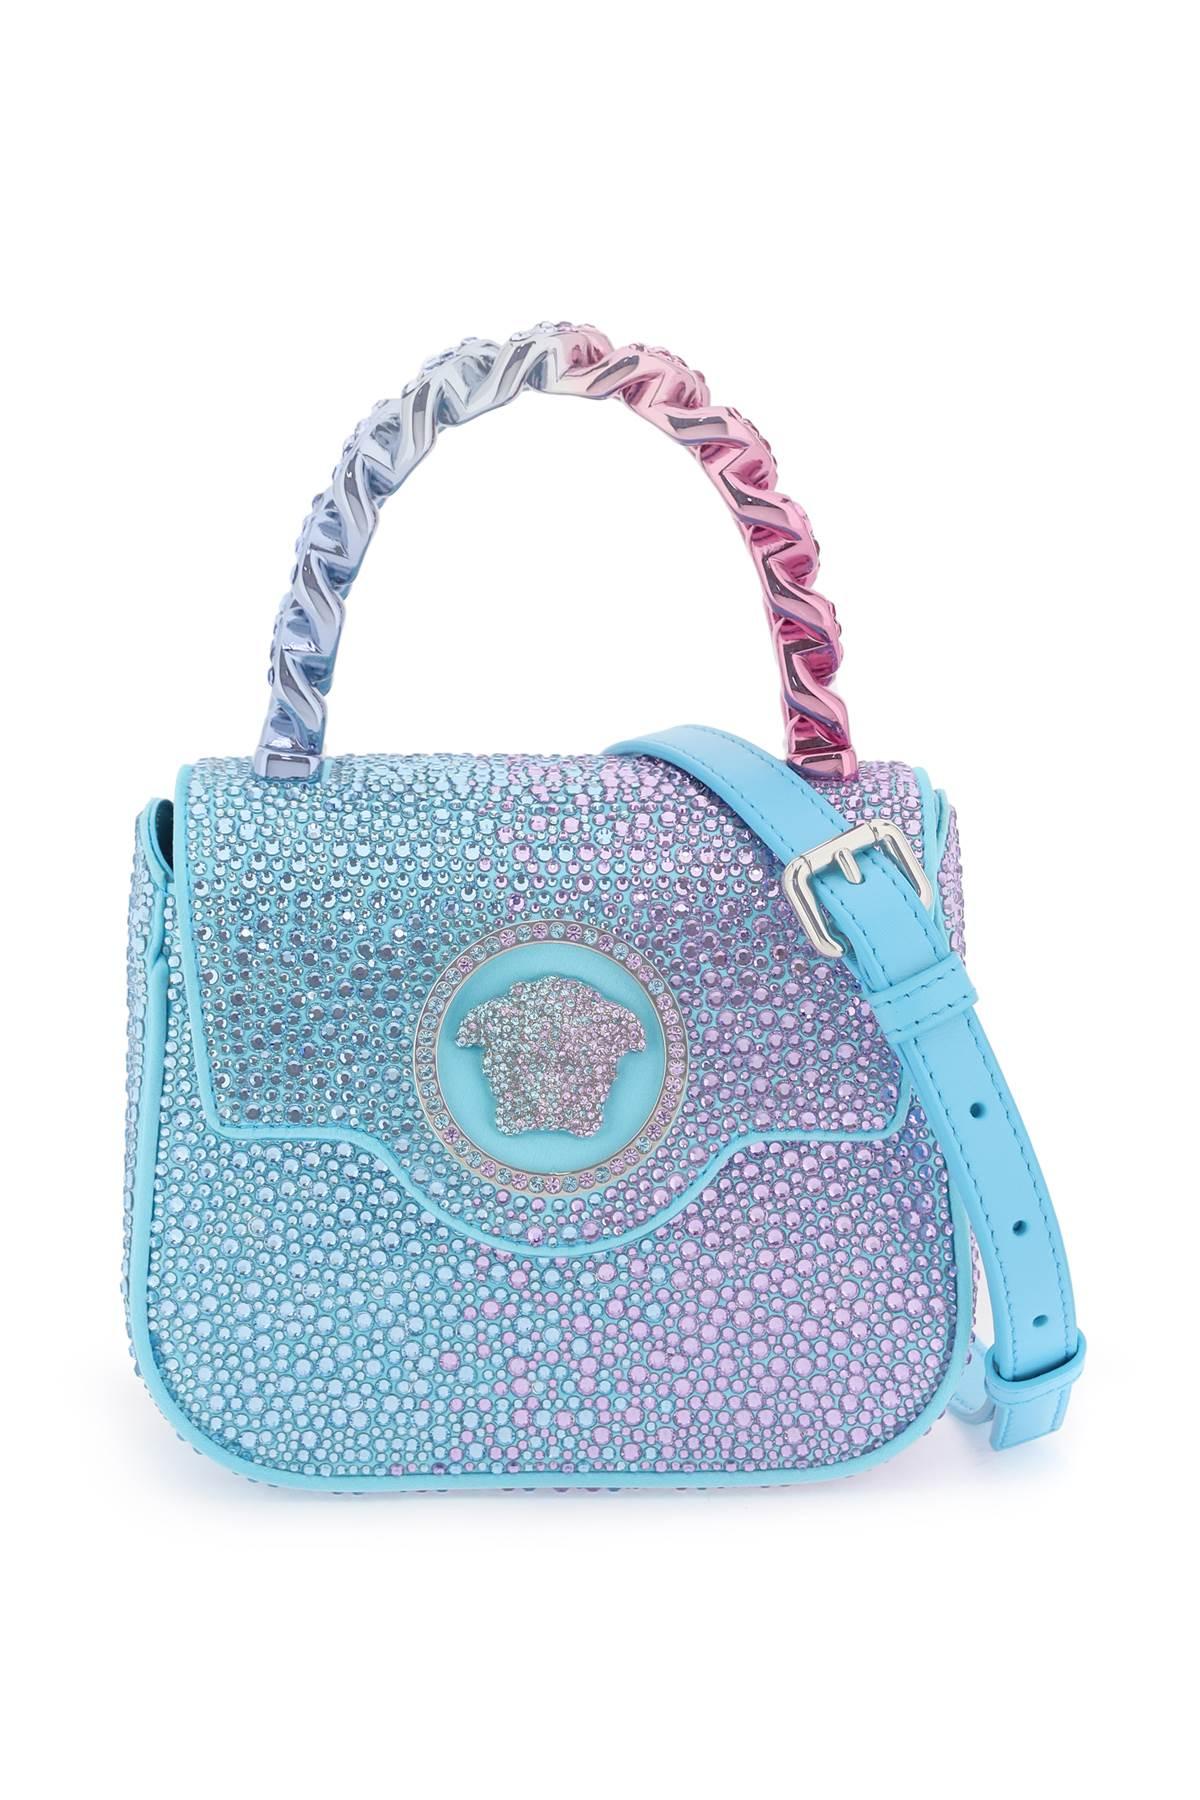 Versace La Medusa Mini Bag With Crystals in Blue